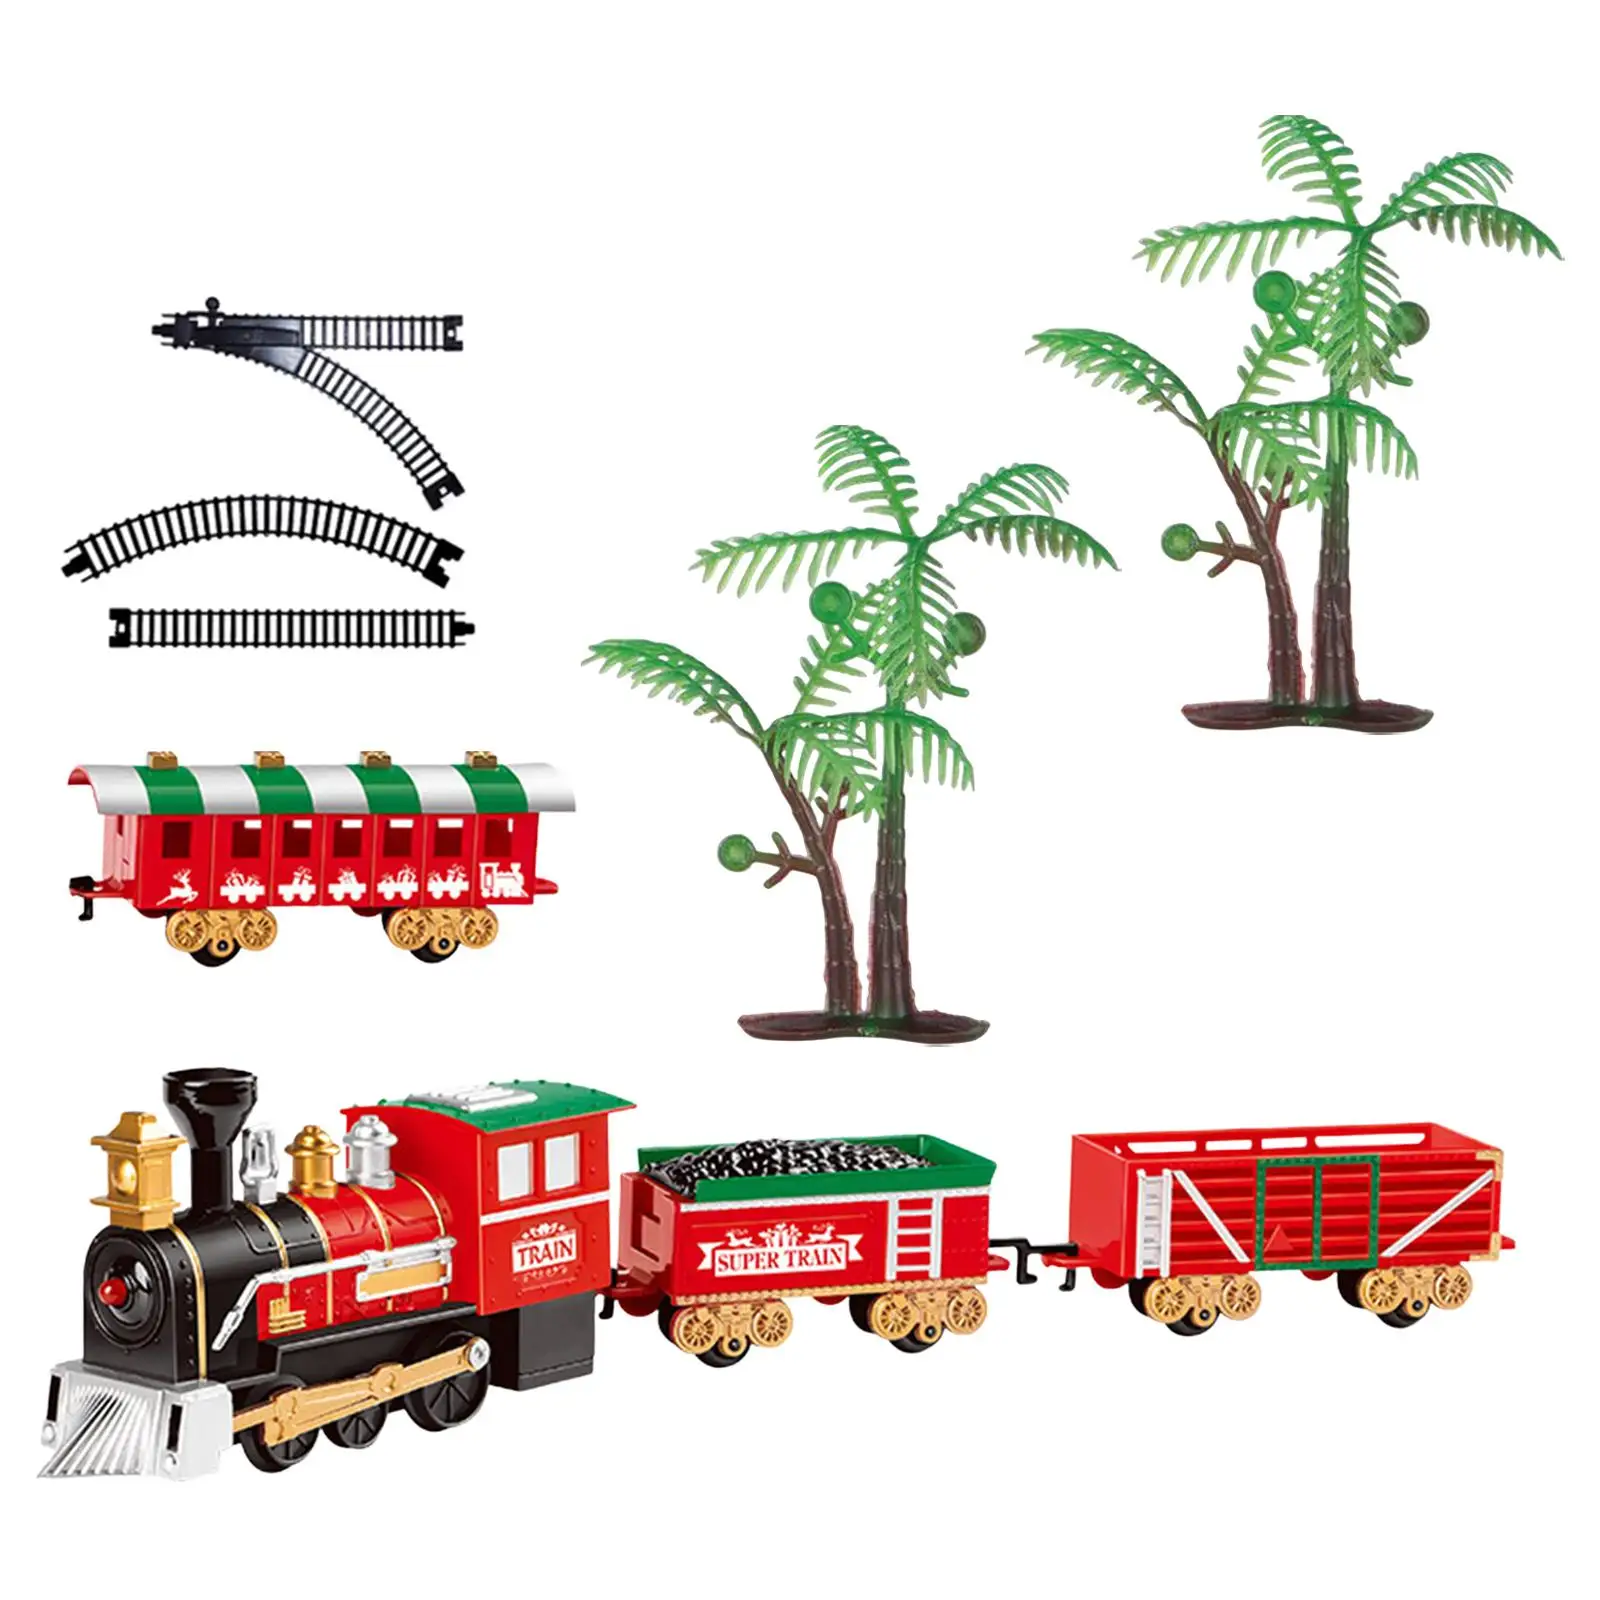 Portable Christmas Train Set Railway Kit Early Leaning Education Toy Railway Track Set for Girls Boys Kids Toddler Children